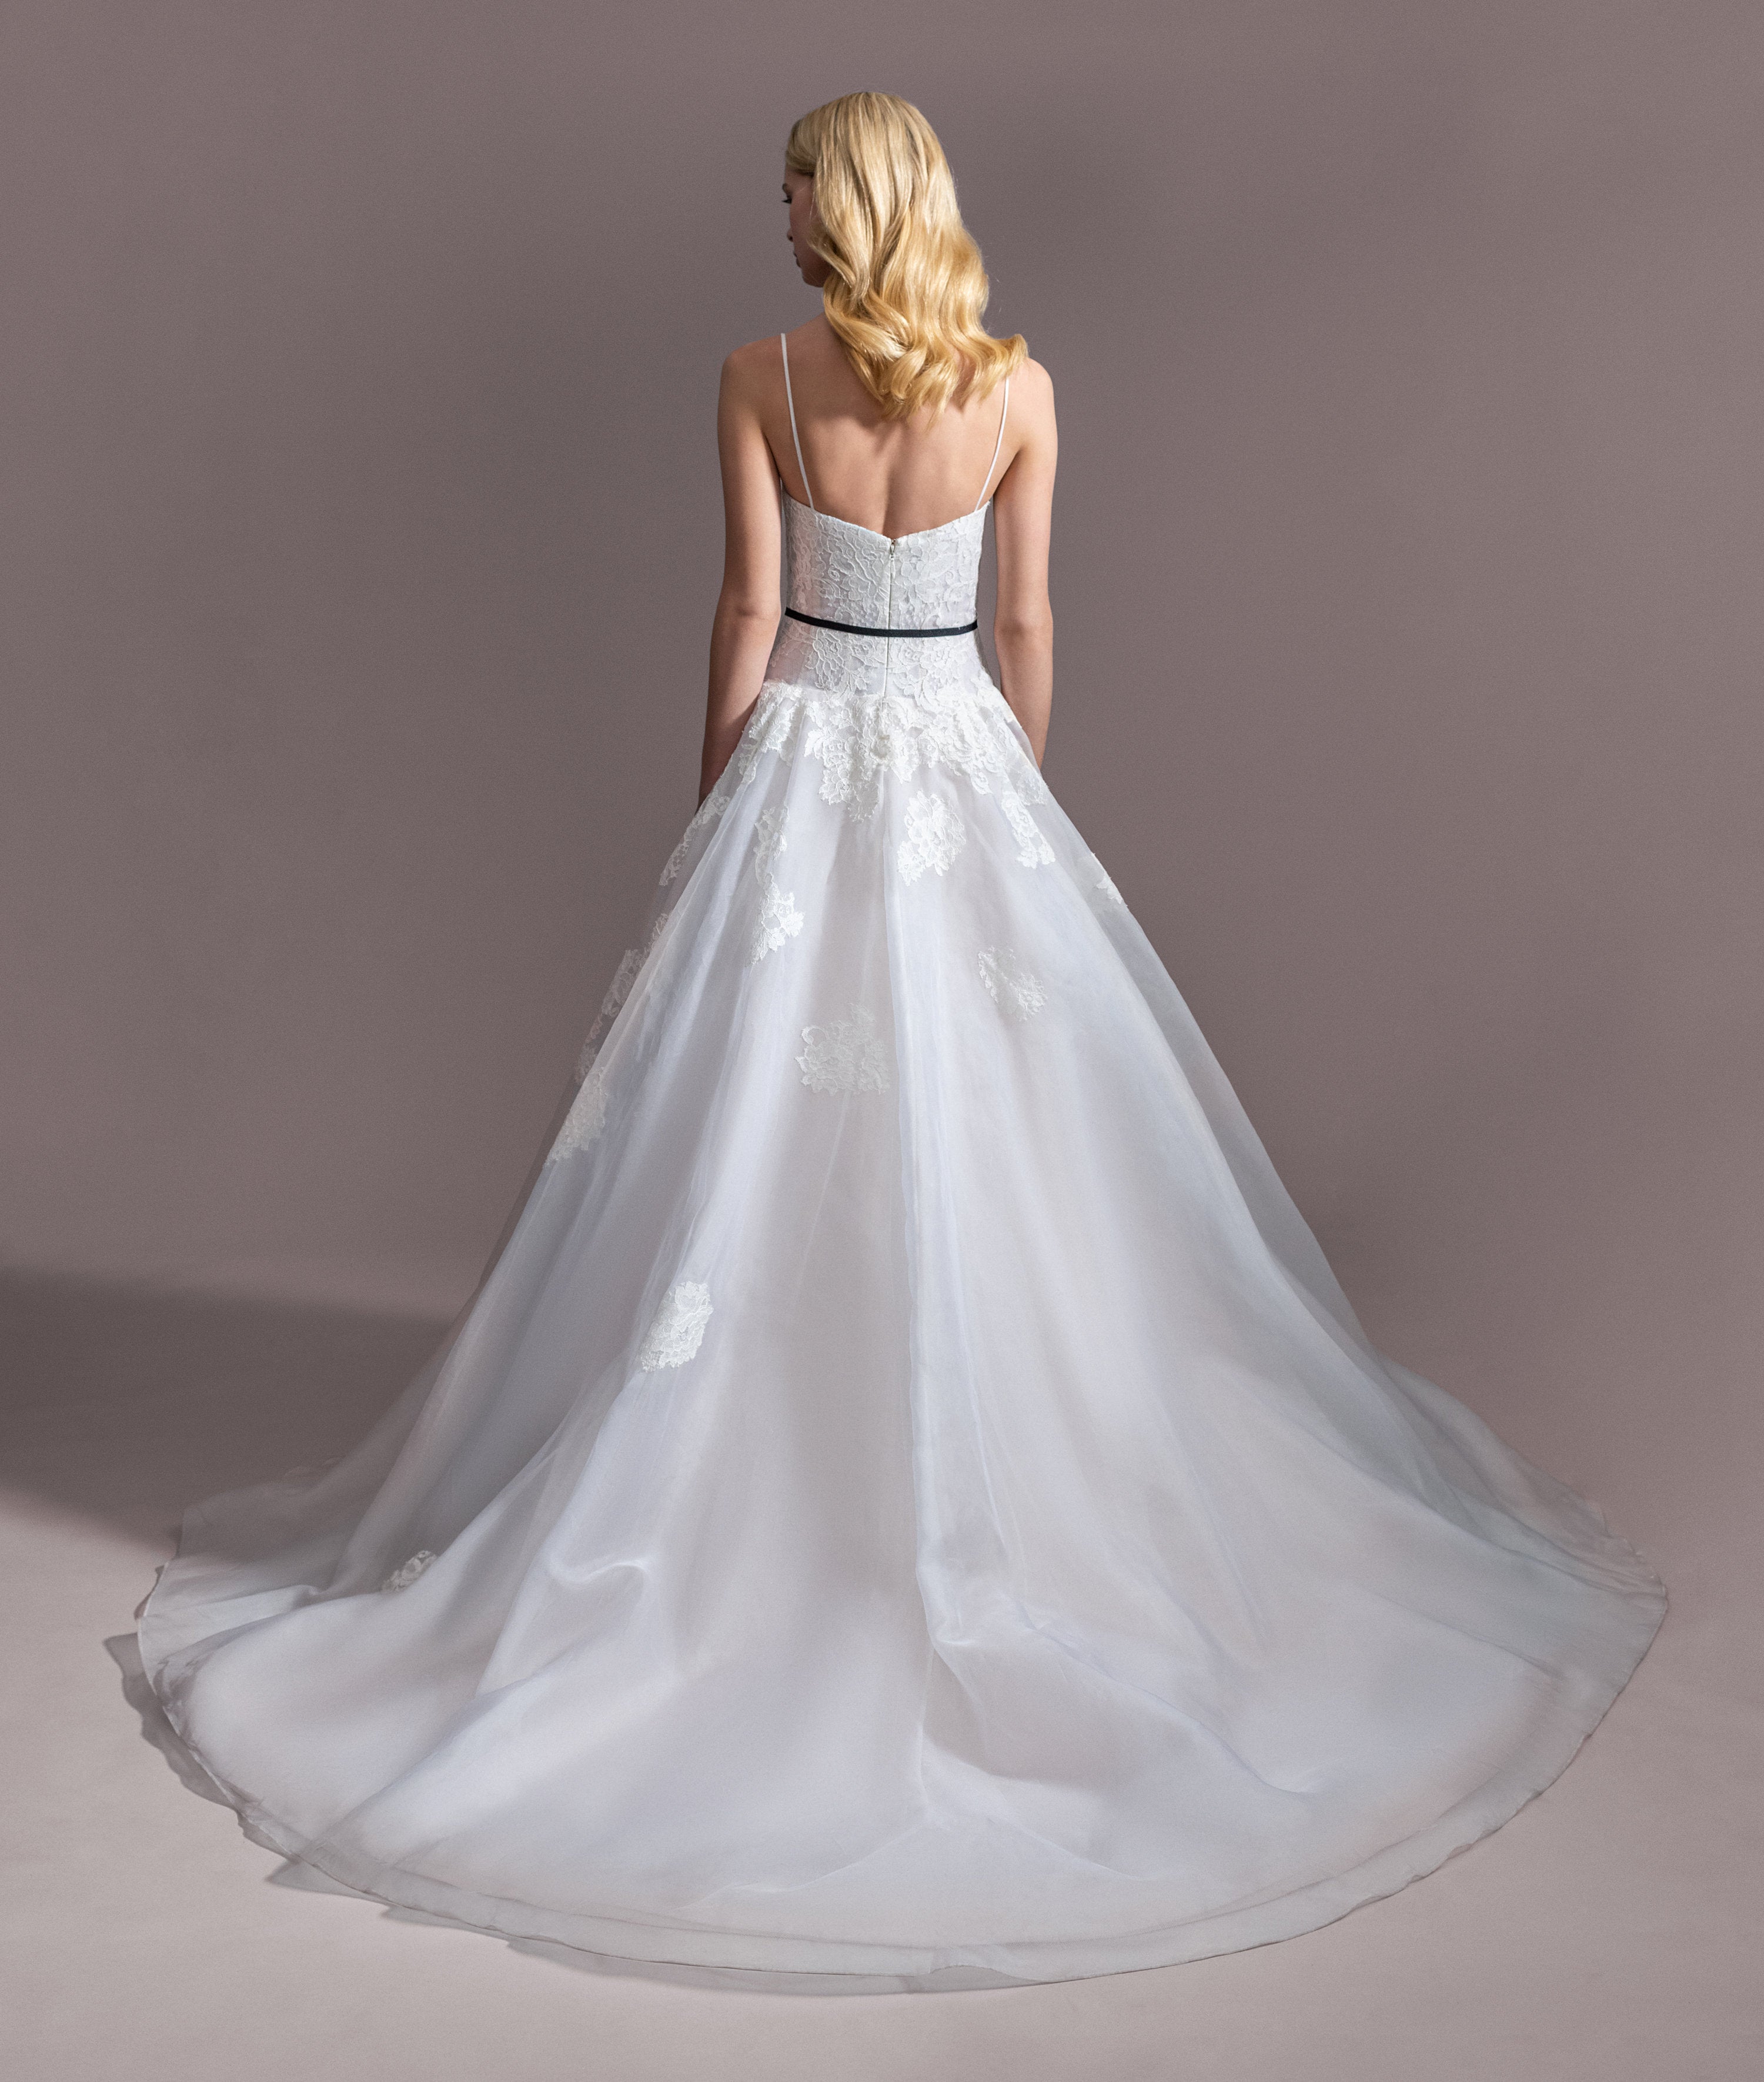 GC#35361 - Allison Webb Coco Wedding Dress in Size 10